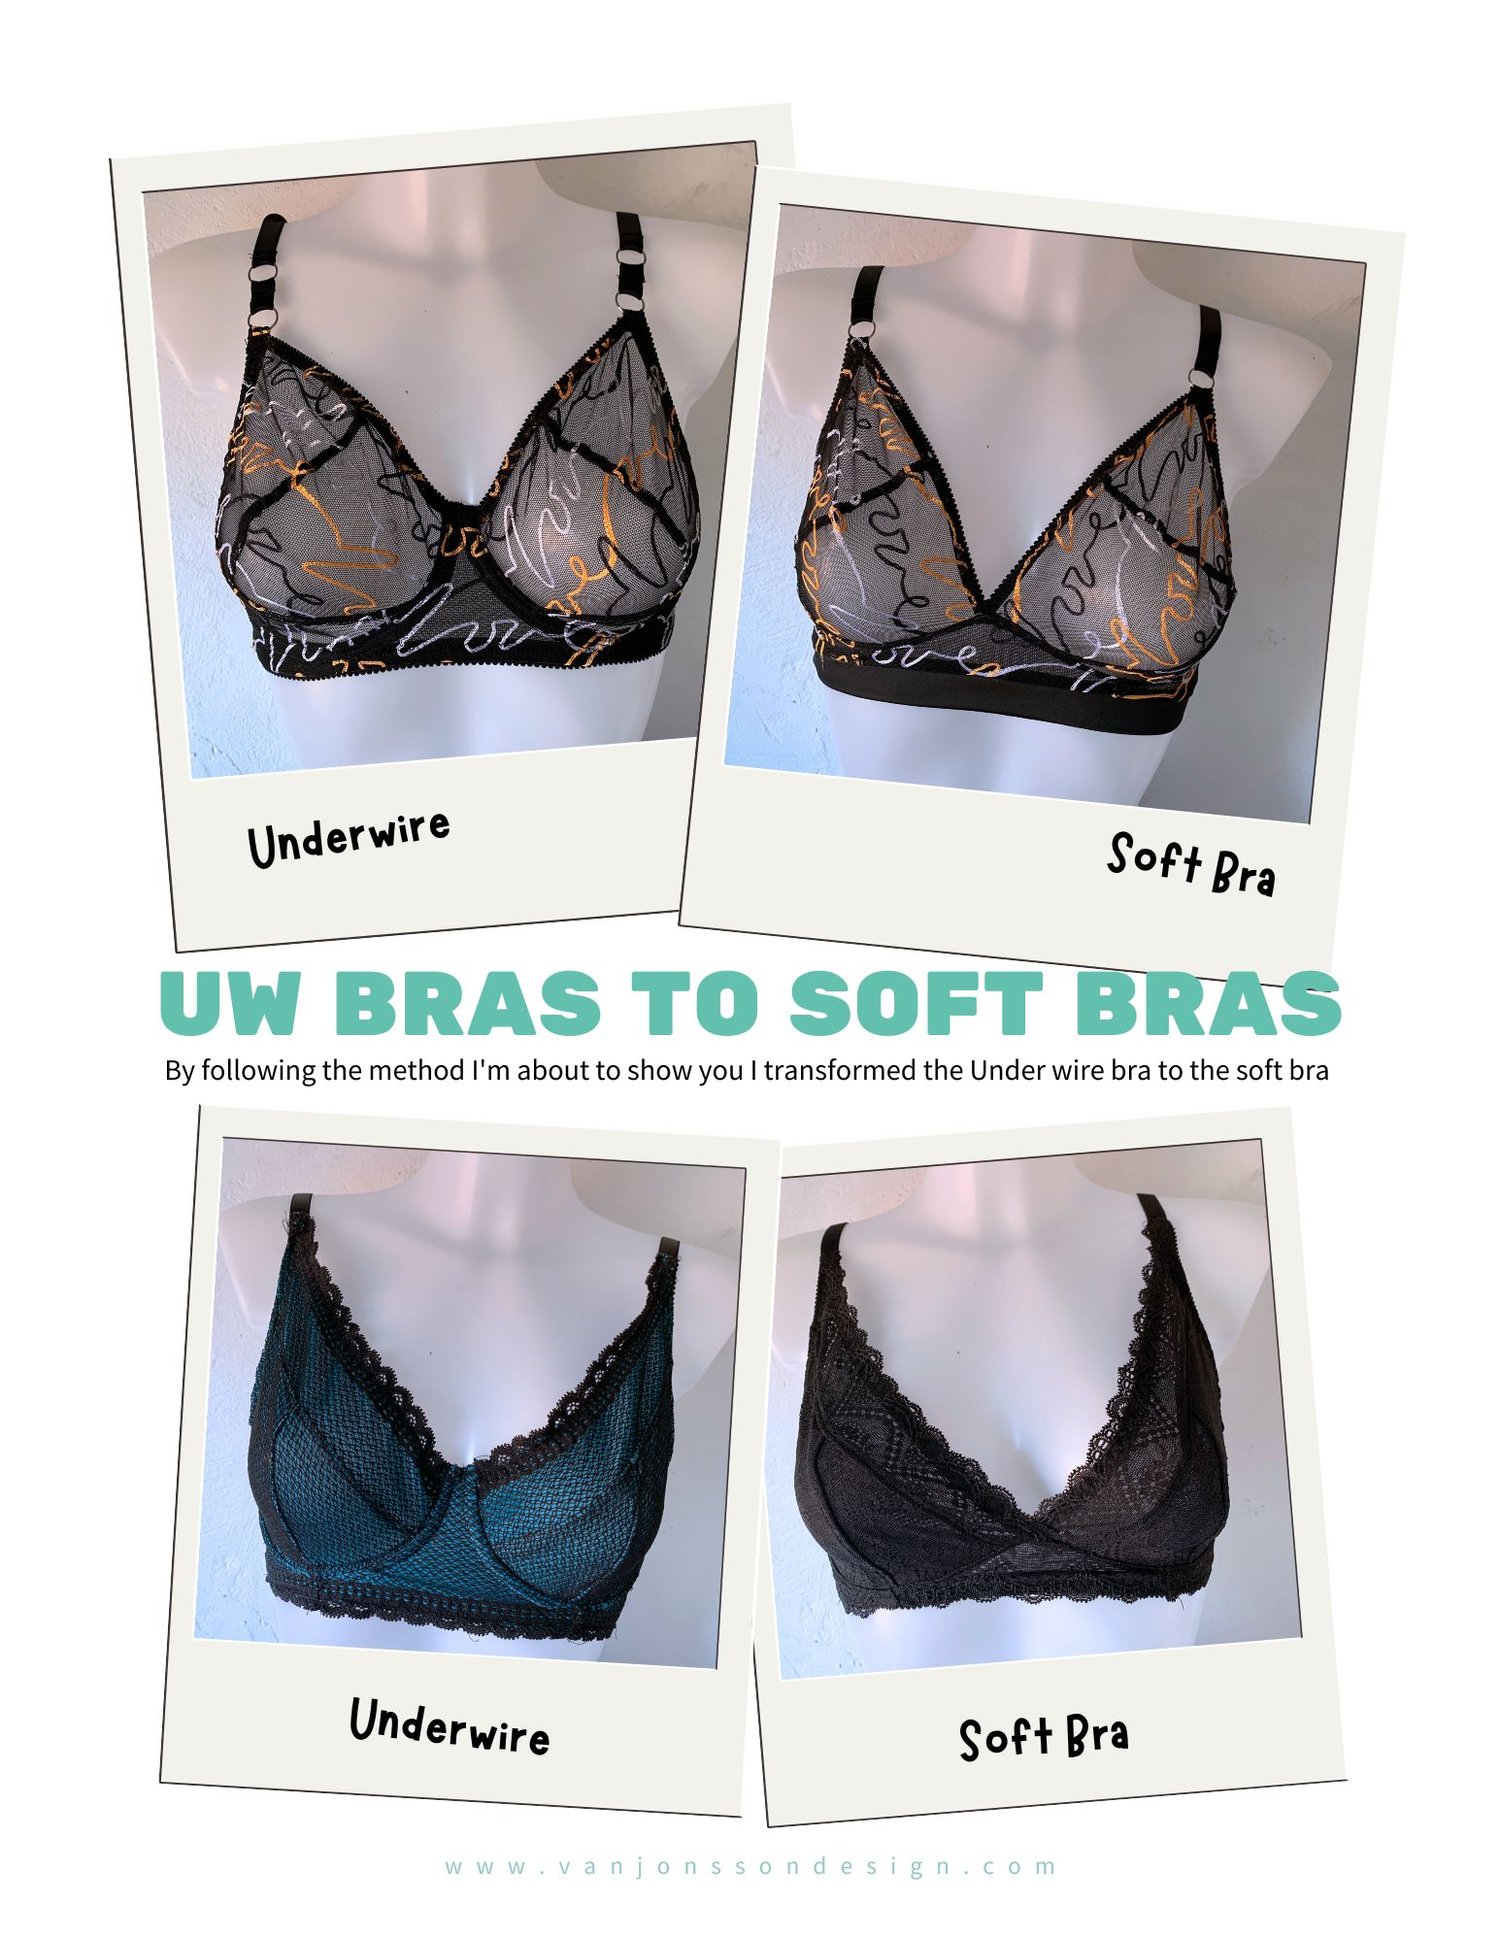 How to change an underwire bra to soft bra: Lingeri-e-course — Van Jonsson Design